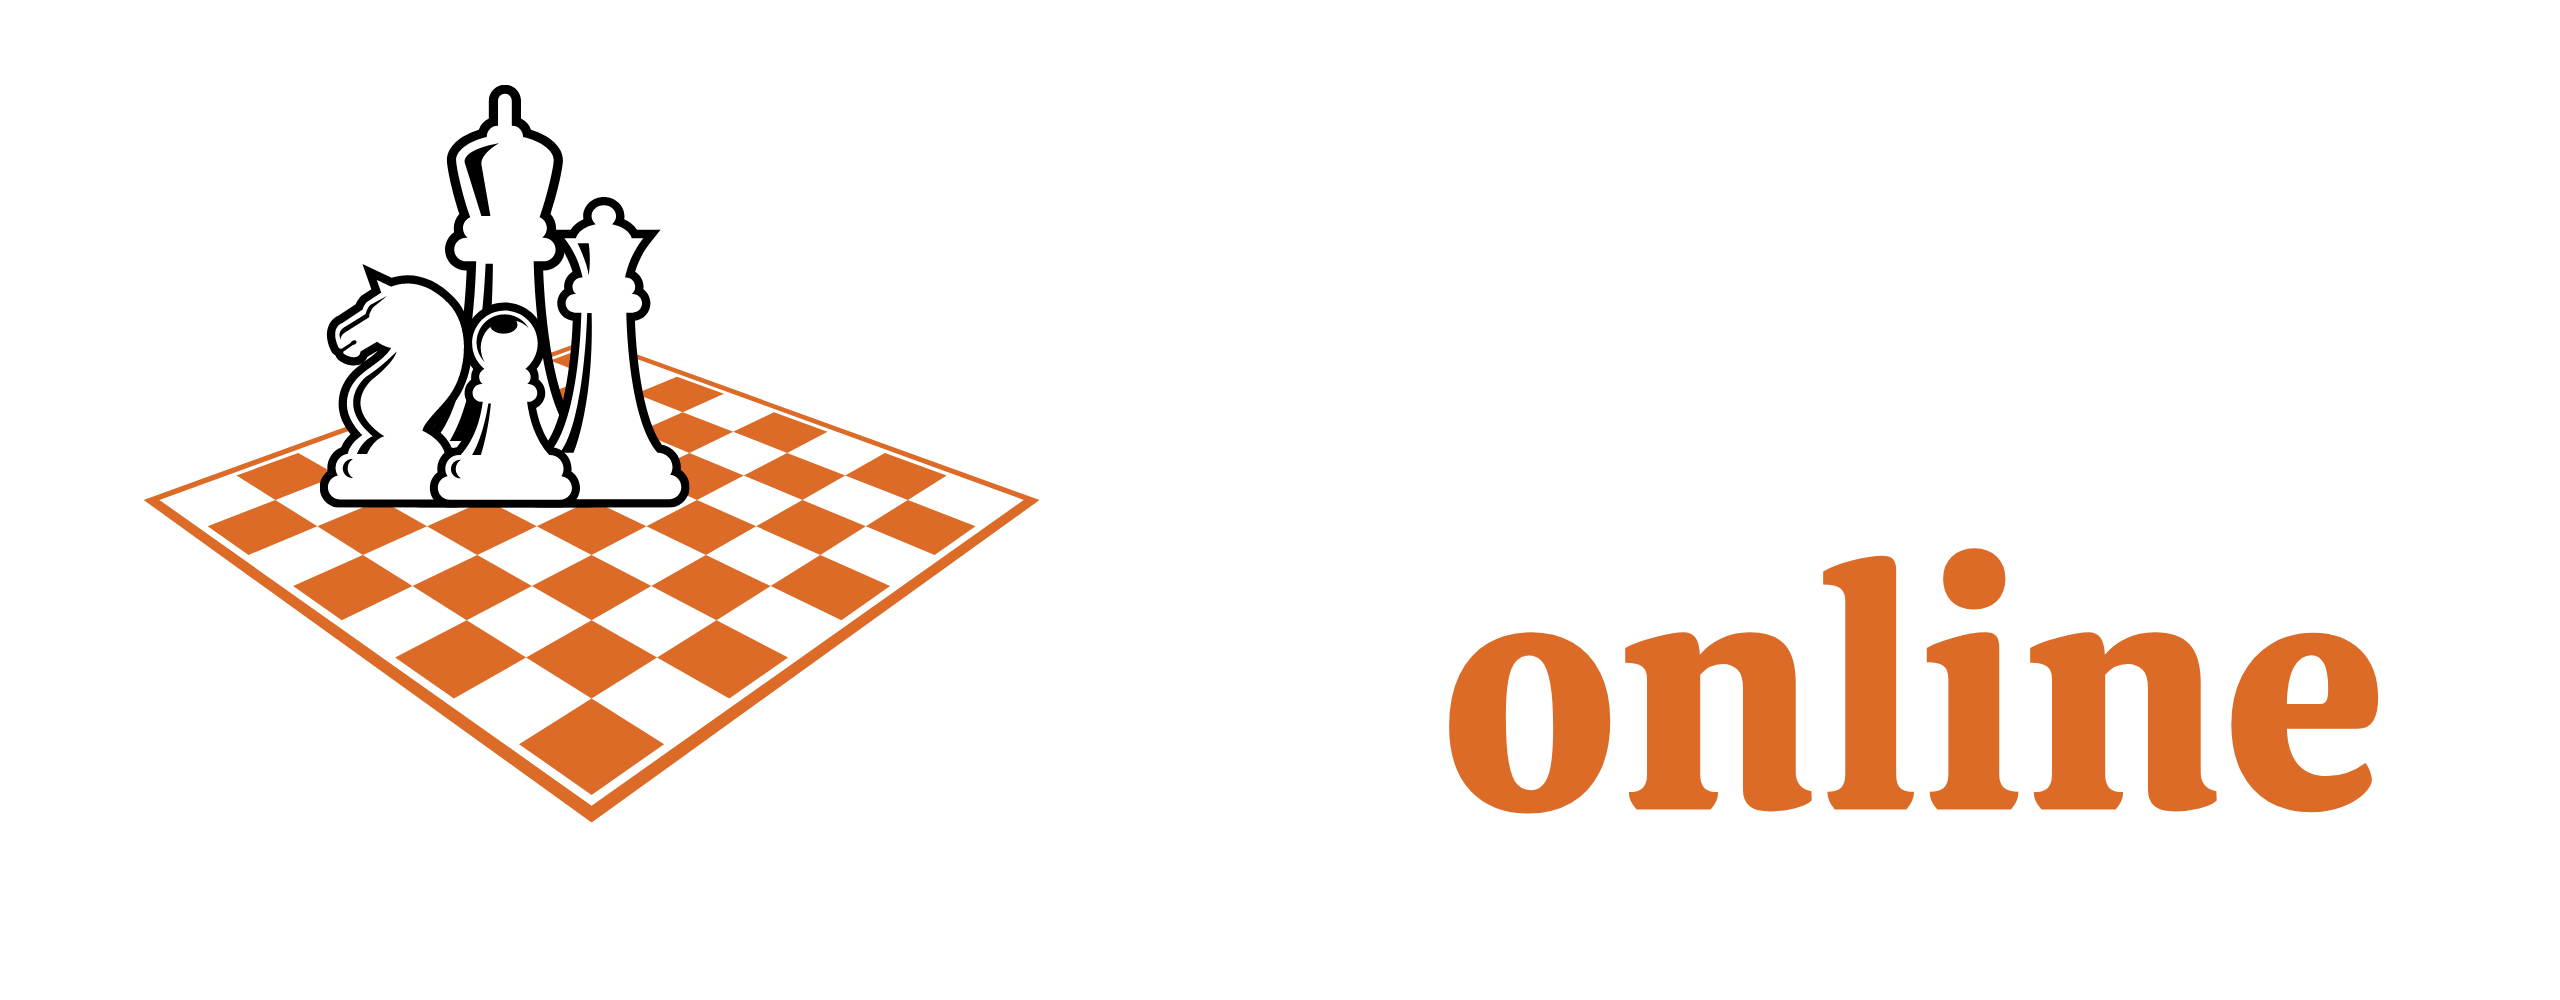 EchecsOnline.Net